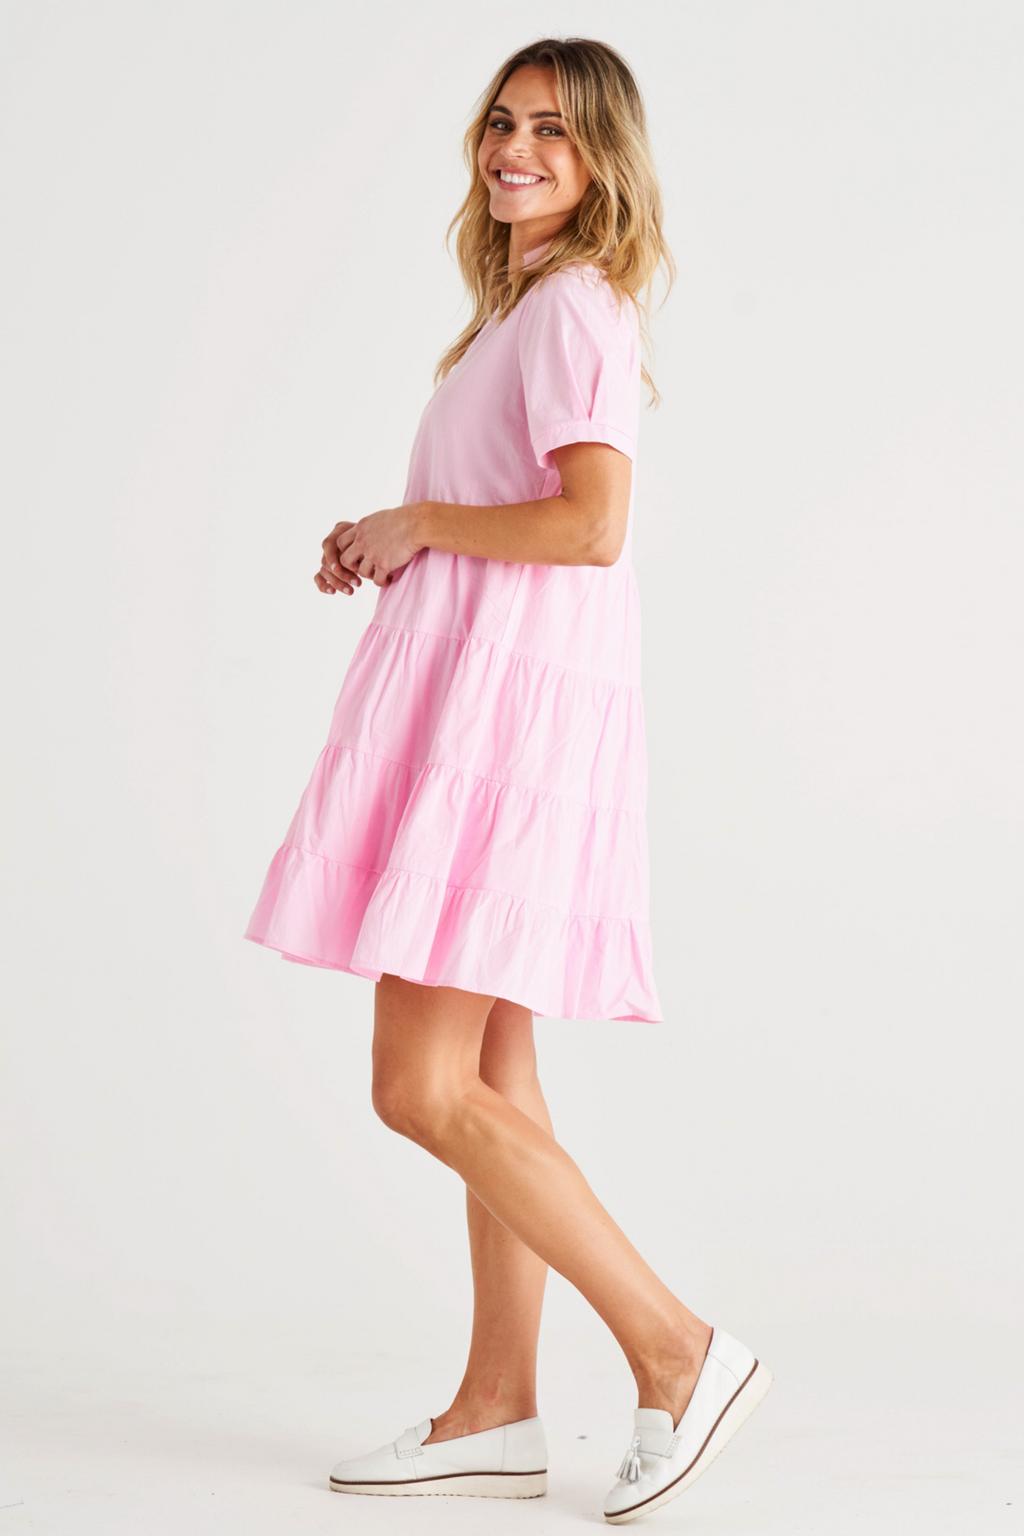 ESTELLE DRESS - Blush Pink